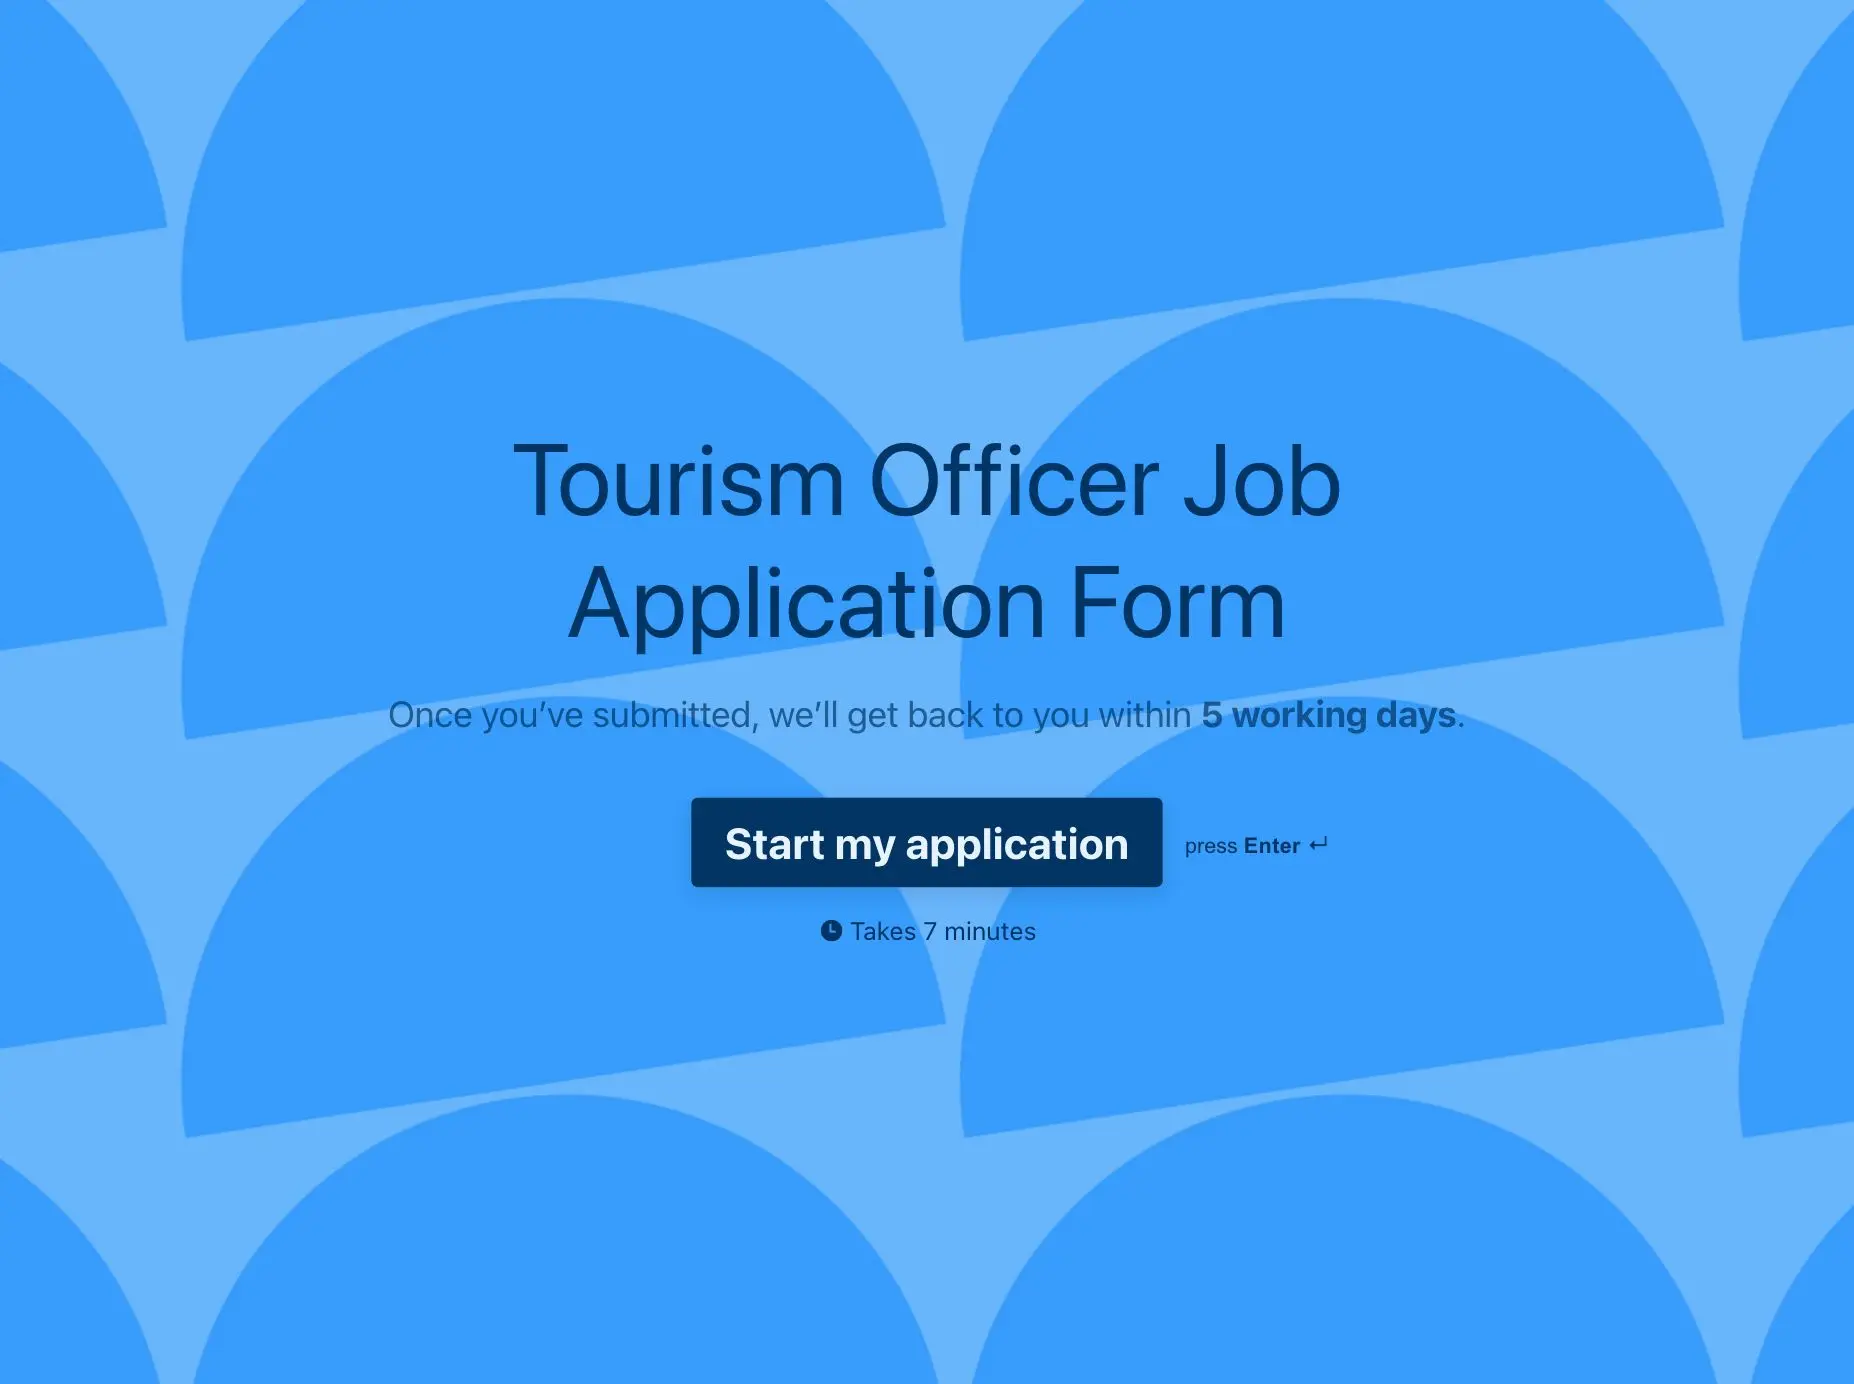 Tourism Officer Job Application Form Template Hero